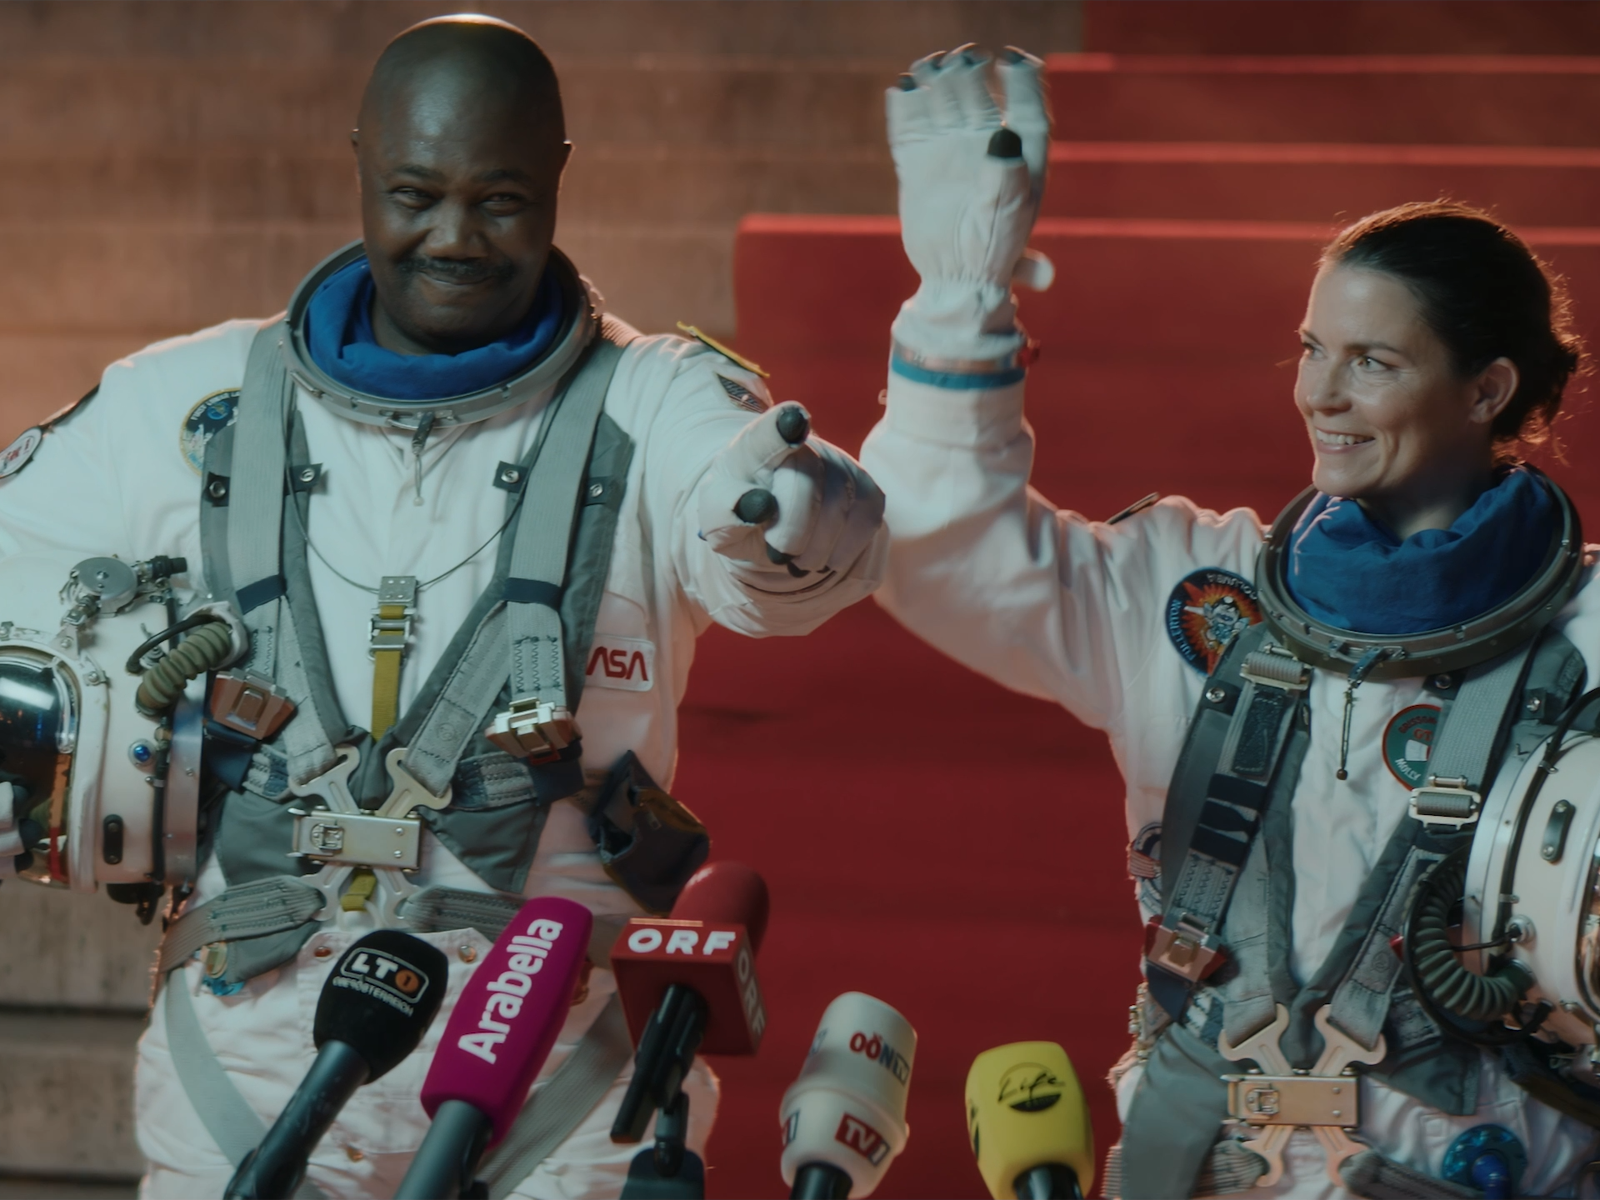 Planet_Linz_Film_astronauts